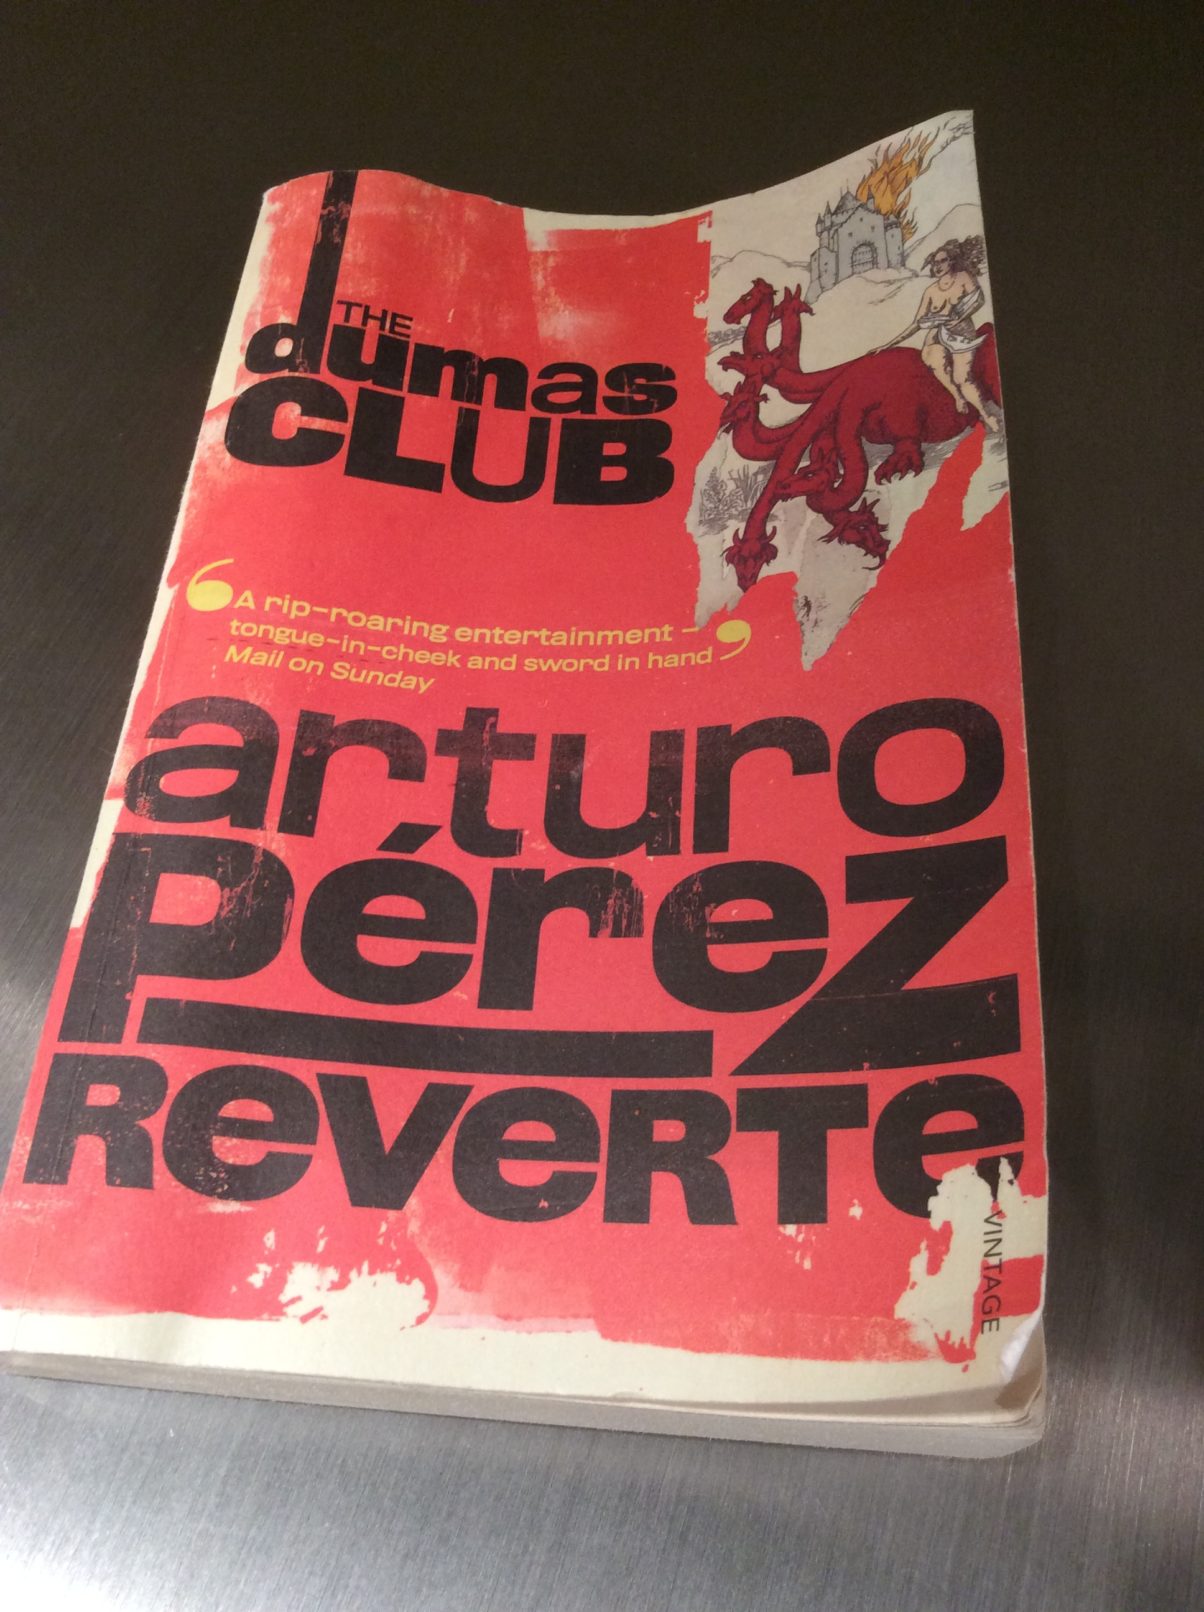 The Dumas Club by Arturo Perez-Reverte